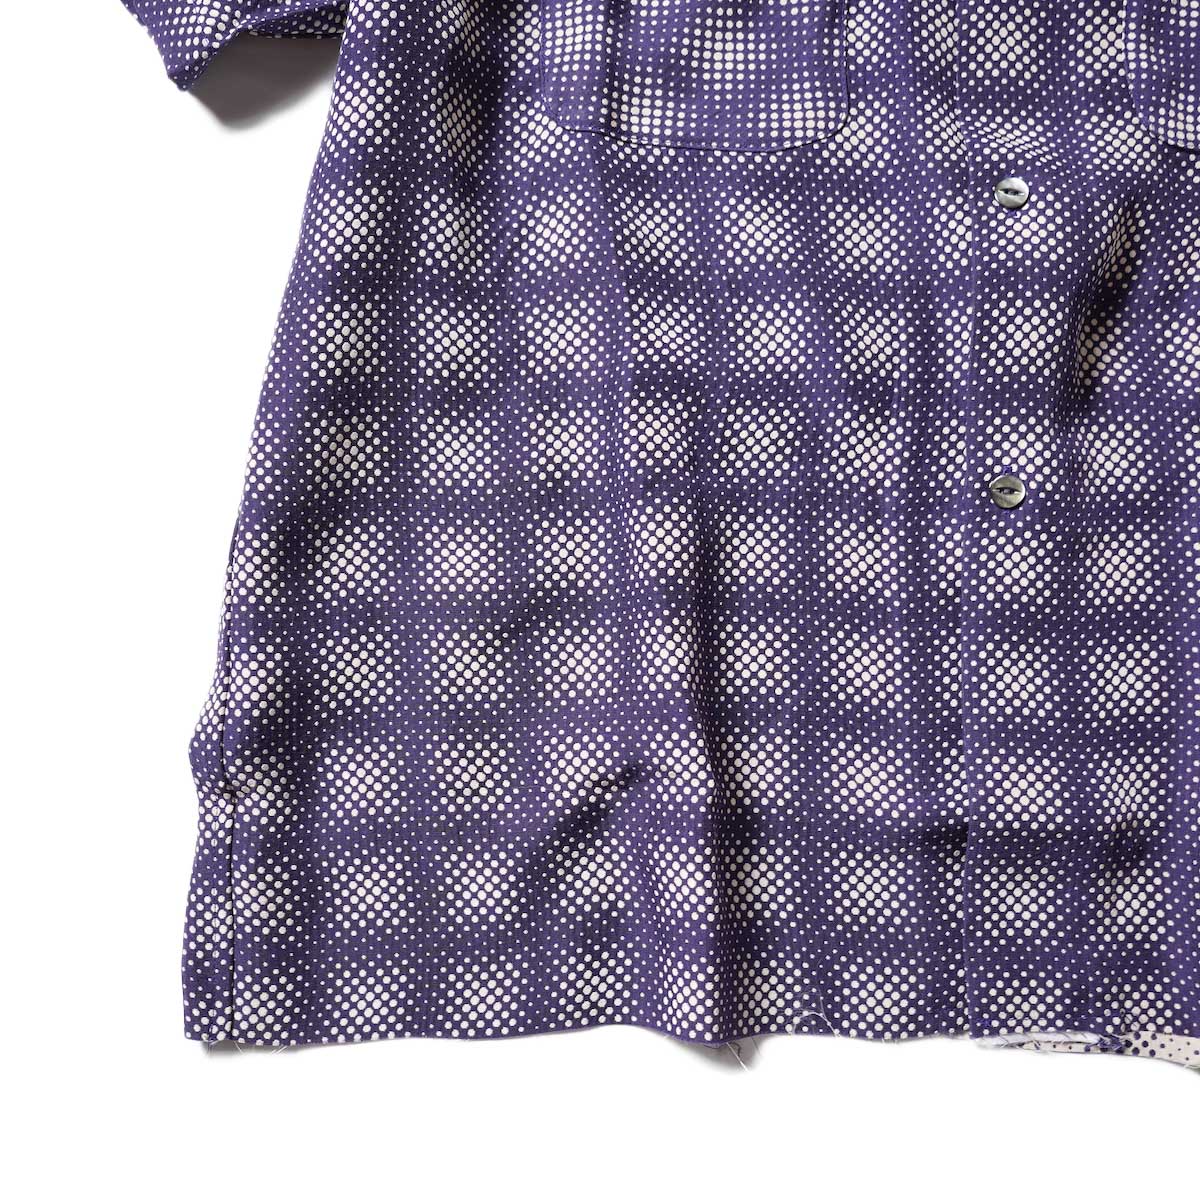 Needles / C.O.B. S/S Classic Shirt - Jacqard (Dot Ombre)裾